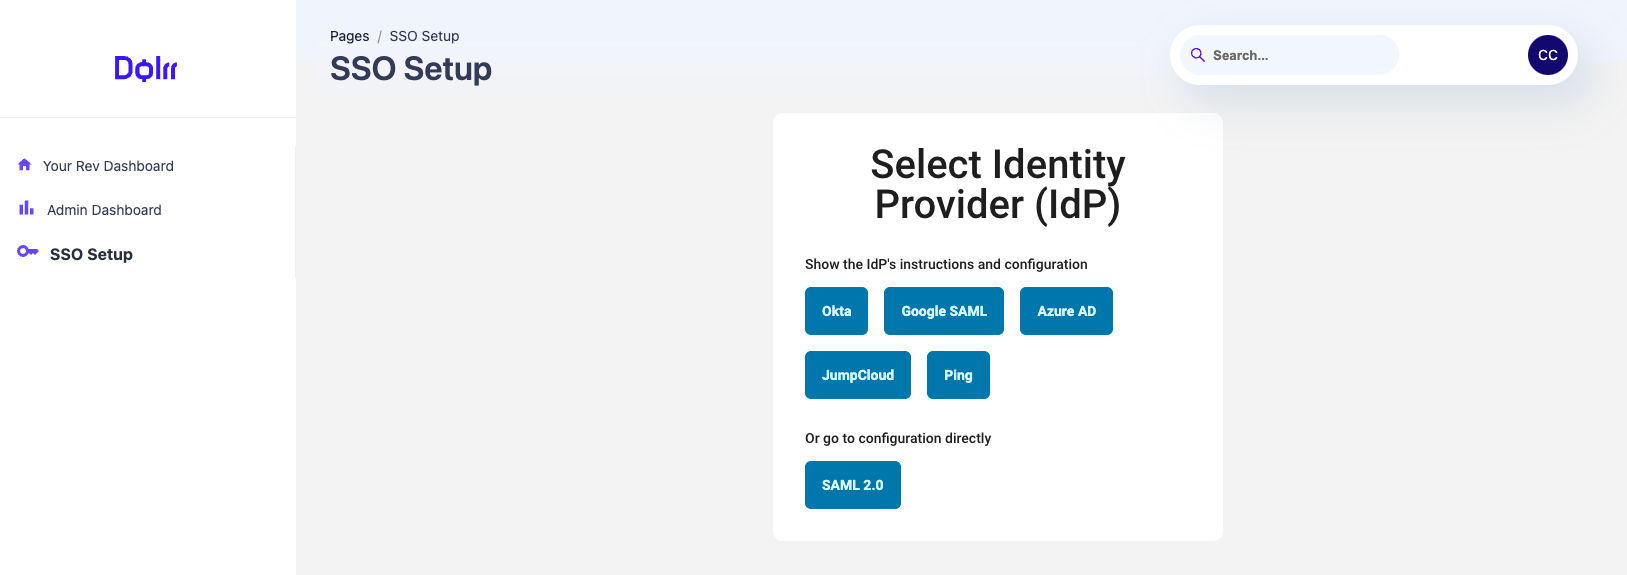 Descope self service provisioning guide select identity provider.